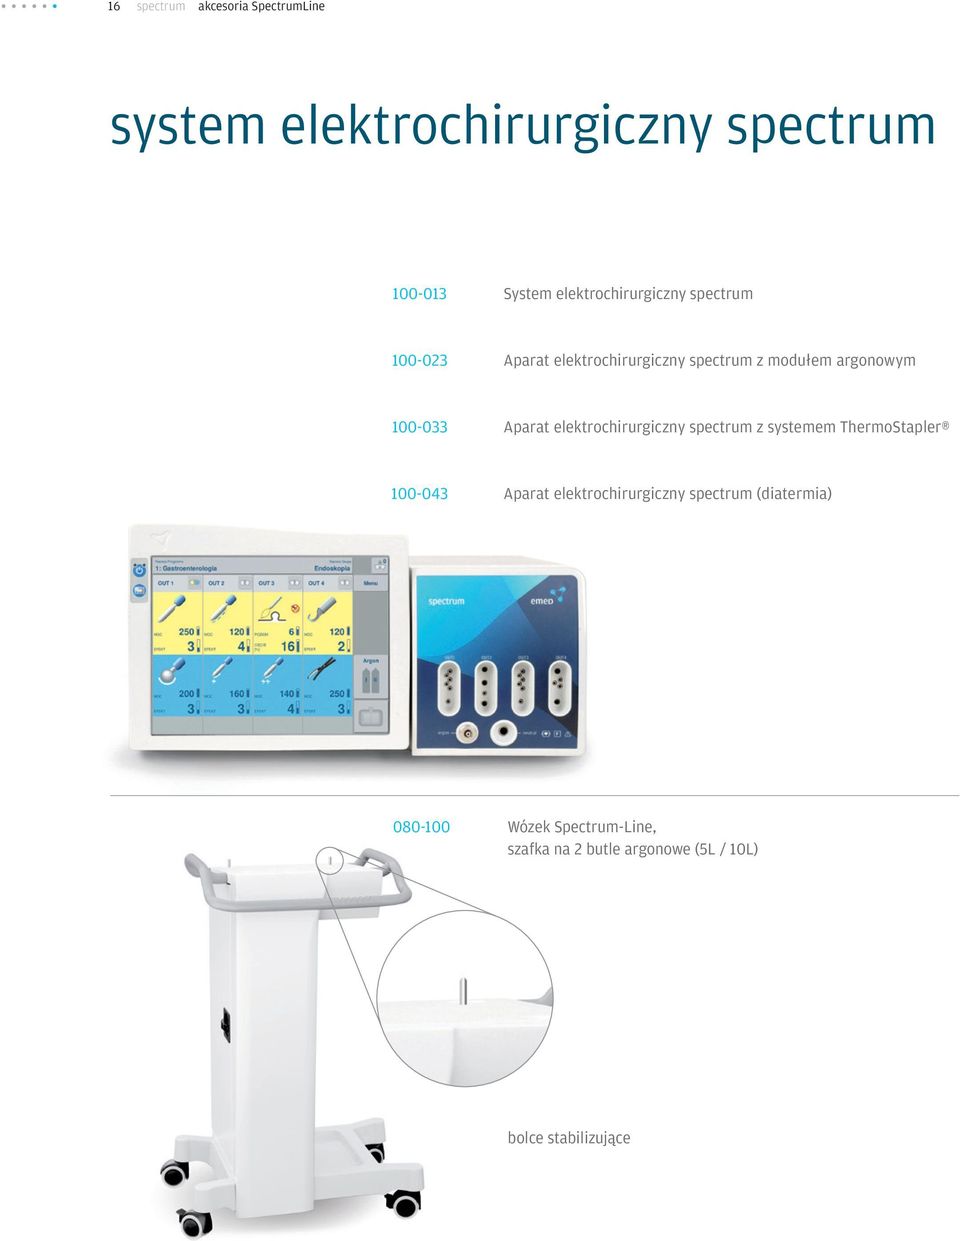 100-033 Aparat elektrochirurgiczny spectrum z systemem ThermoStapler 100-043 Aparat